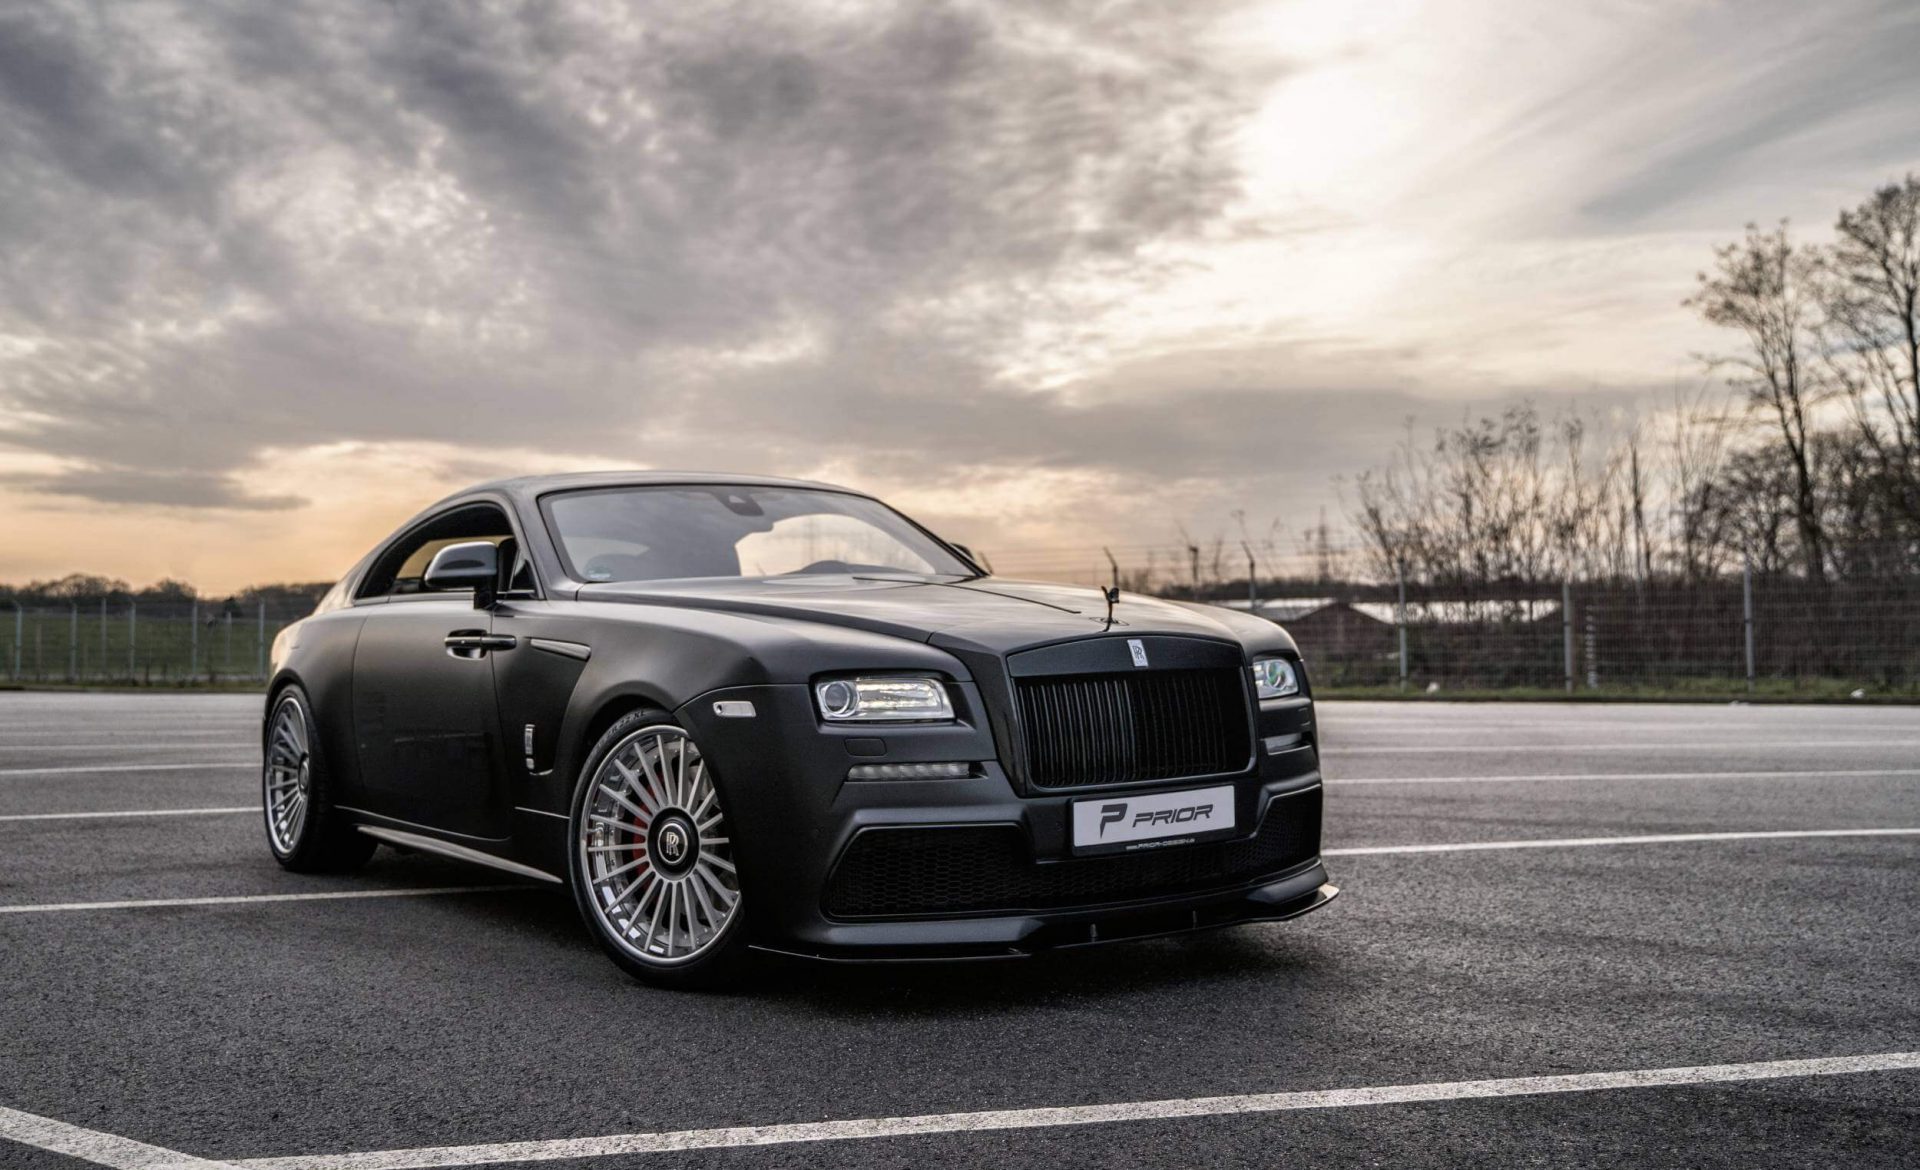 PD BlackShot Front Spoiler suitable for PD BlackShot Front Bumper for Rolls Royce Wraith